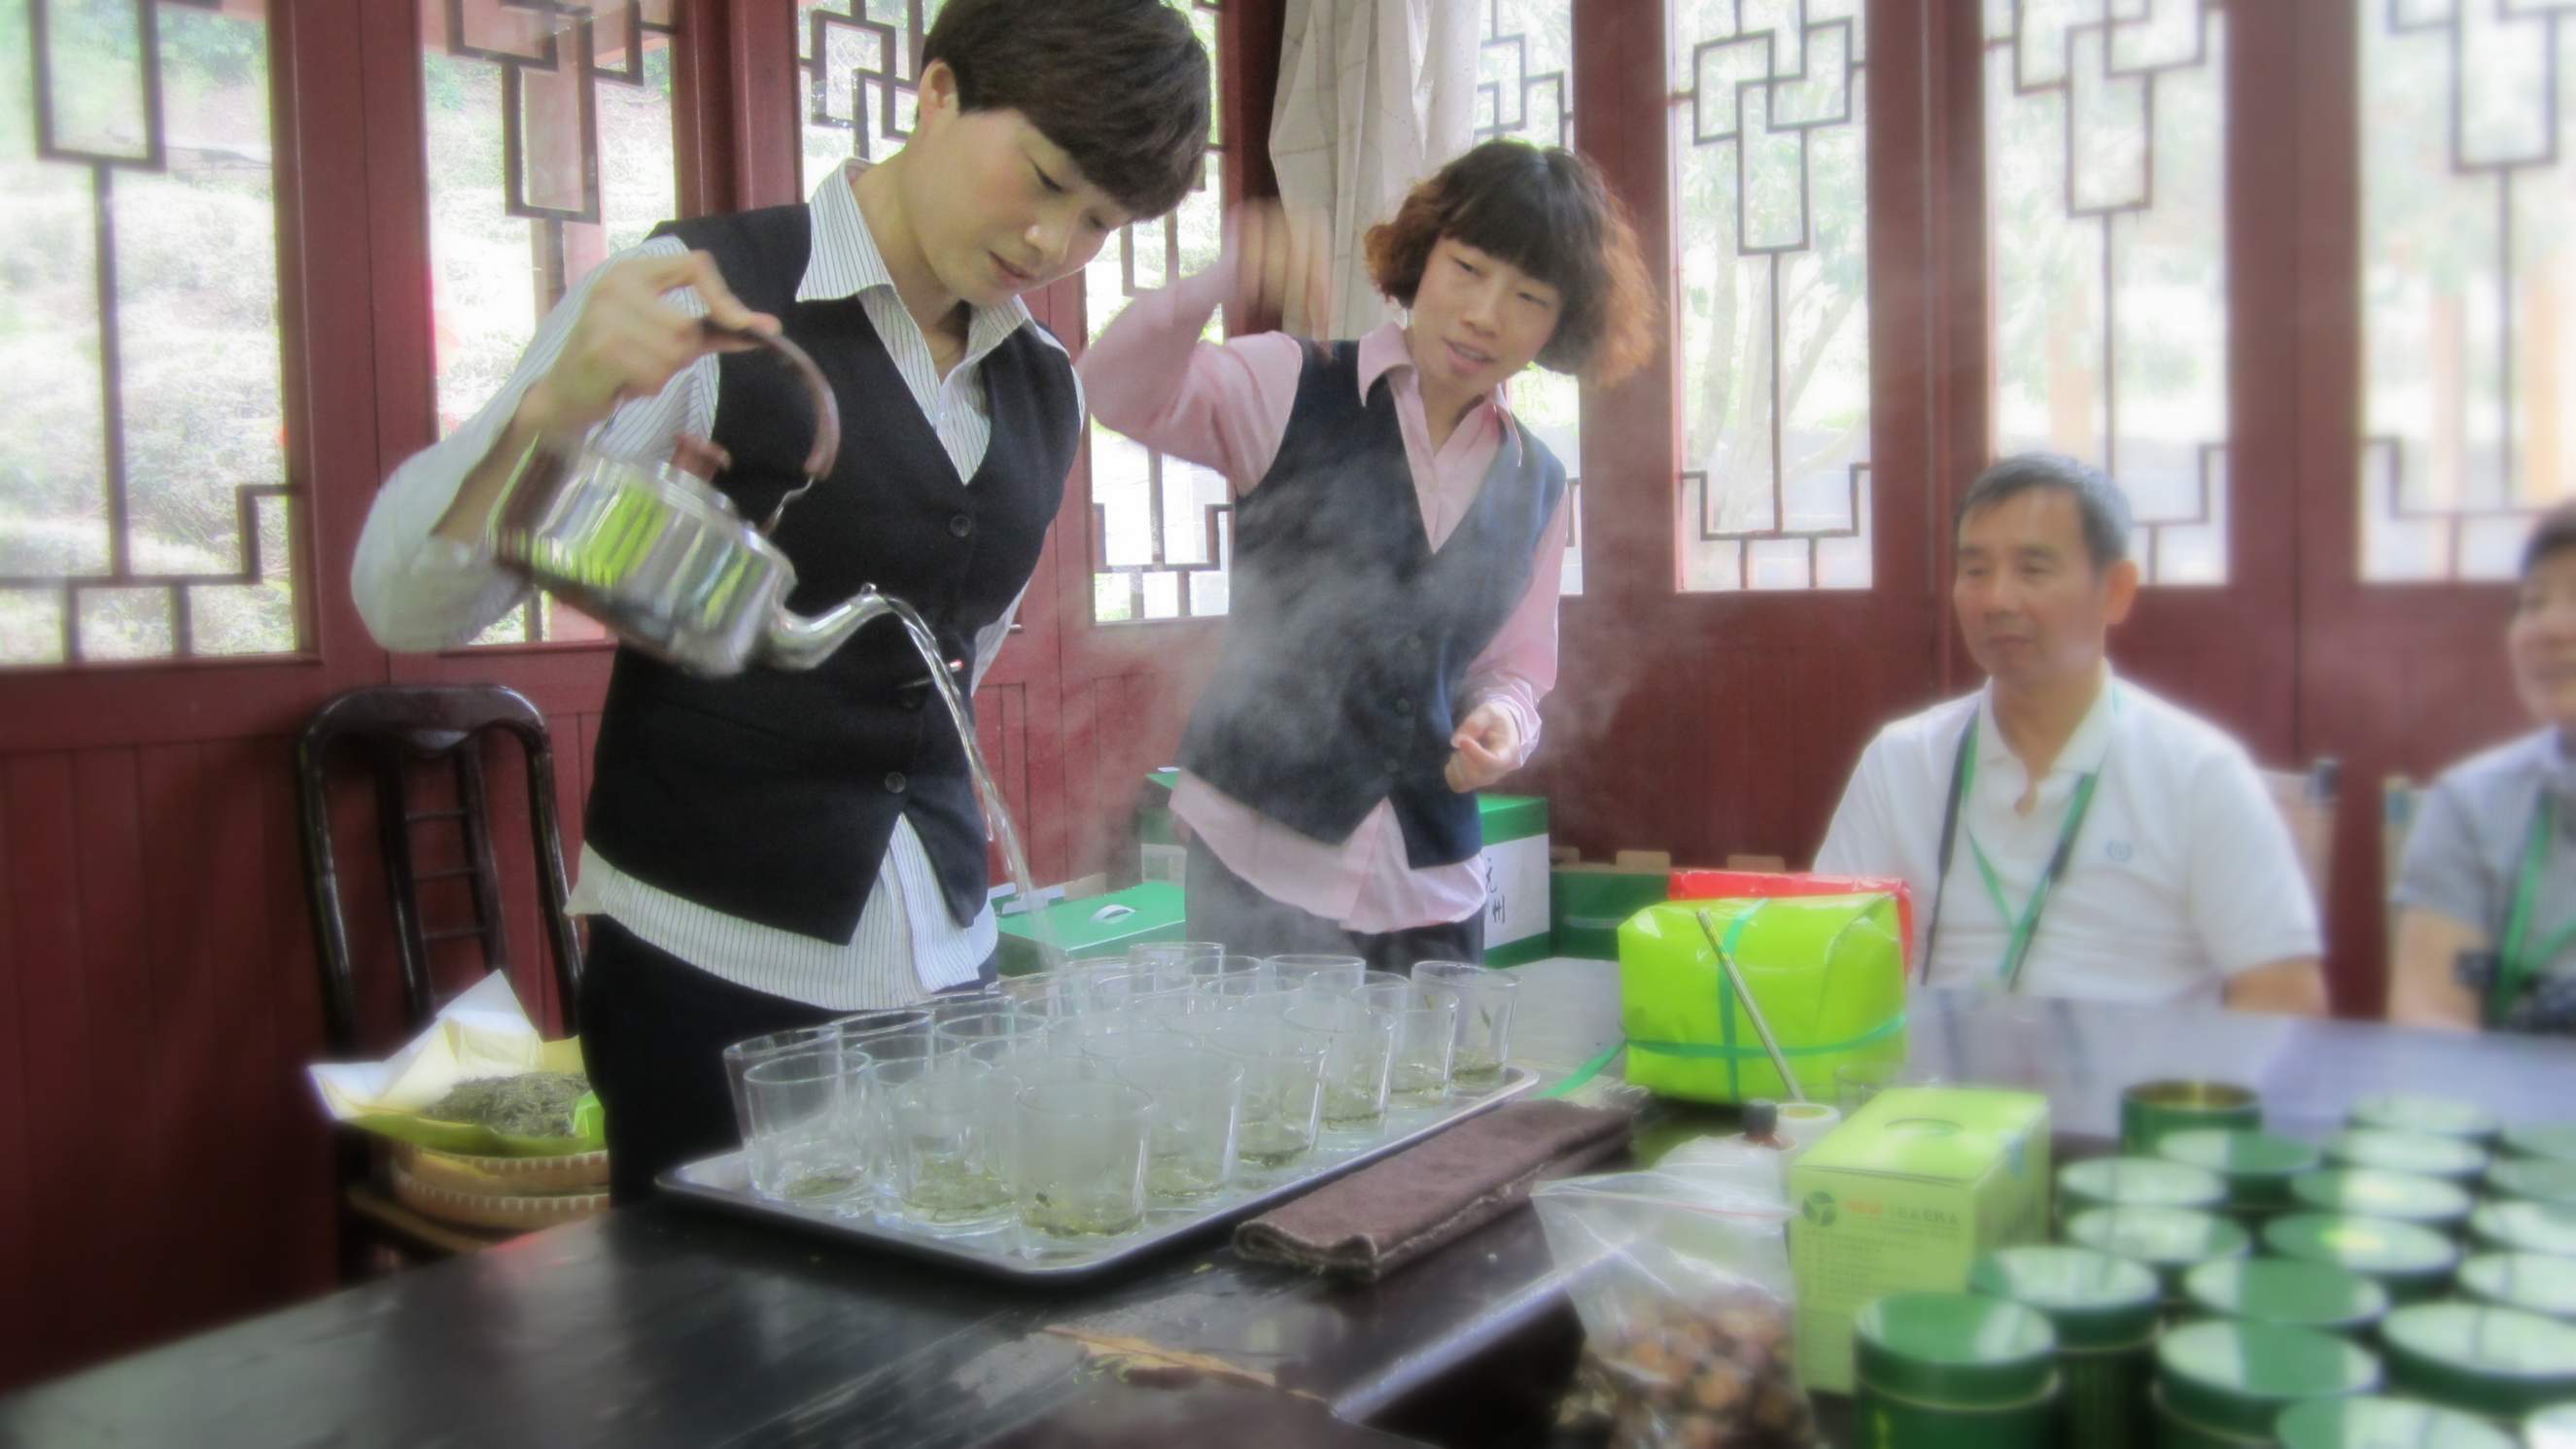 Two ladies touting the benefits of Longjing green tea.